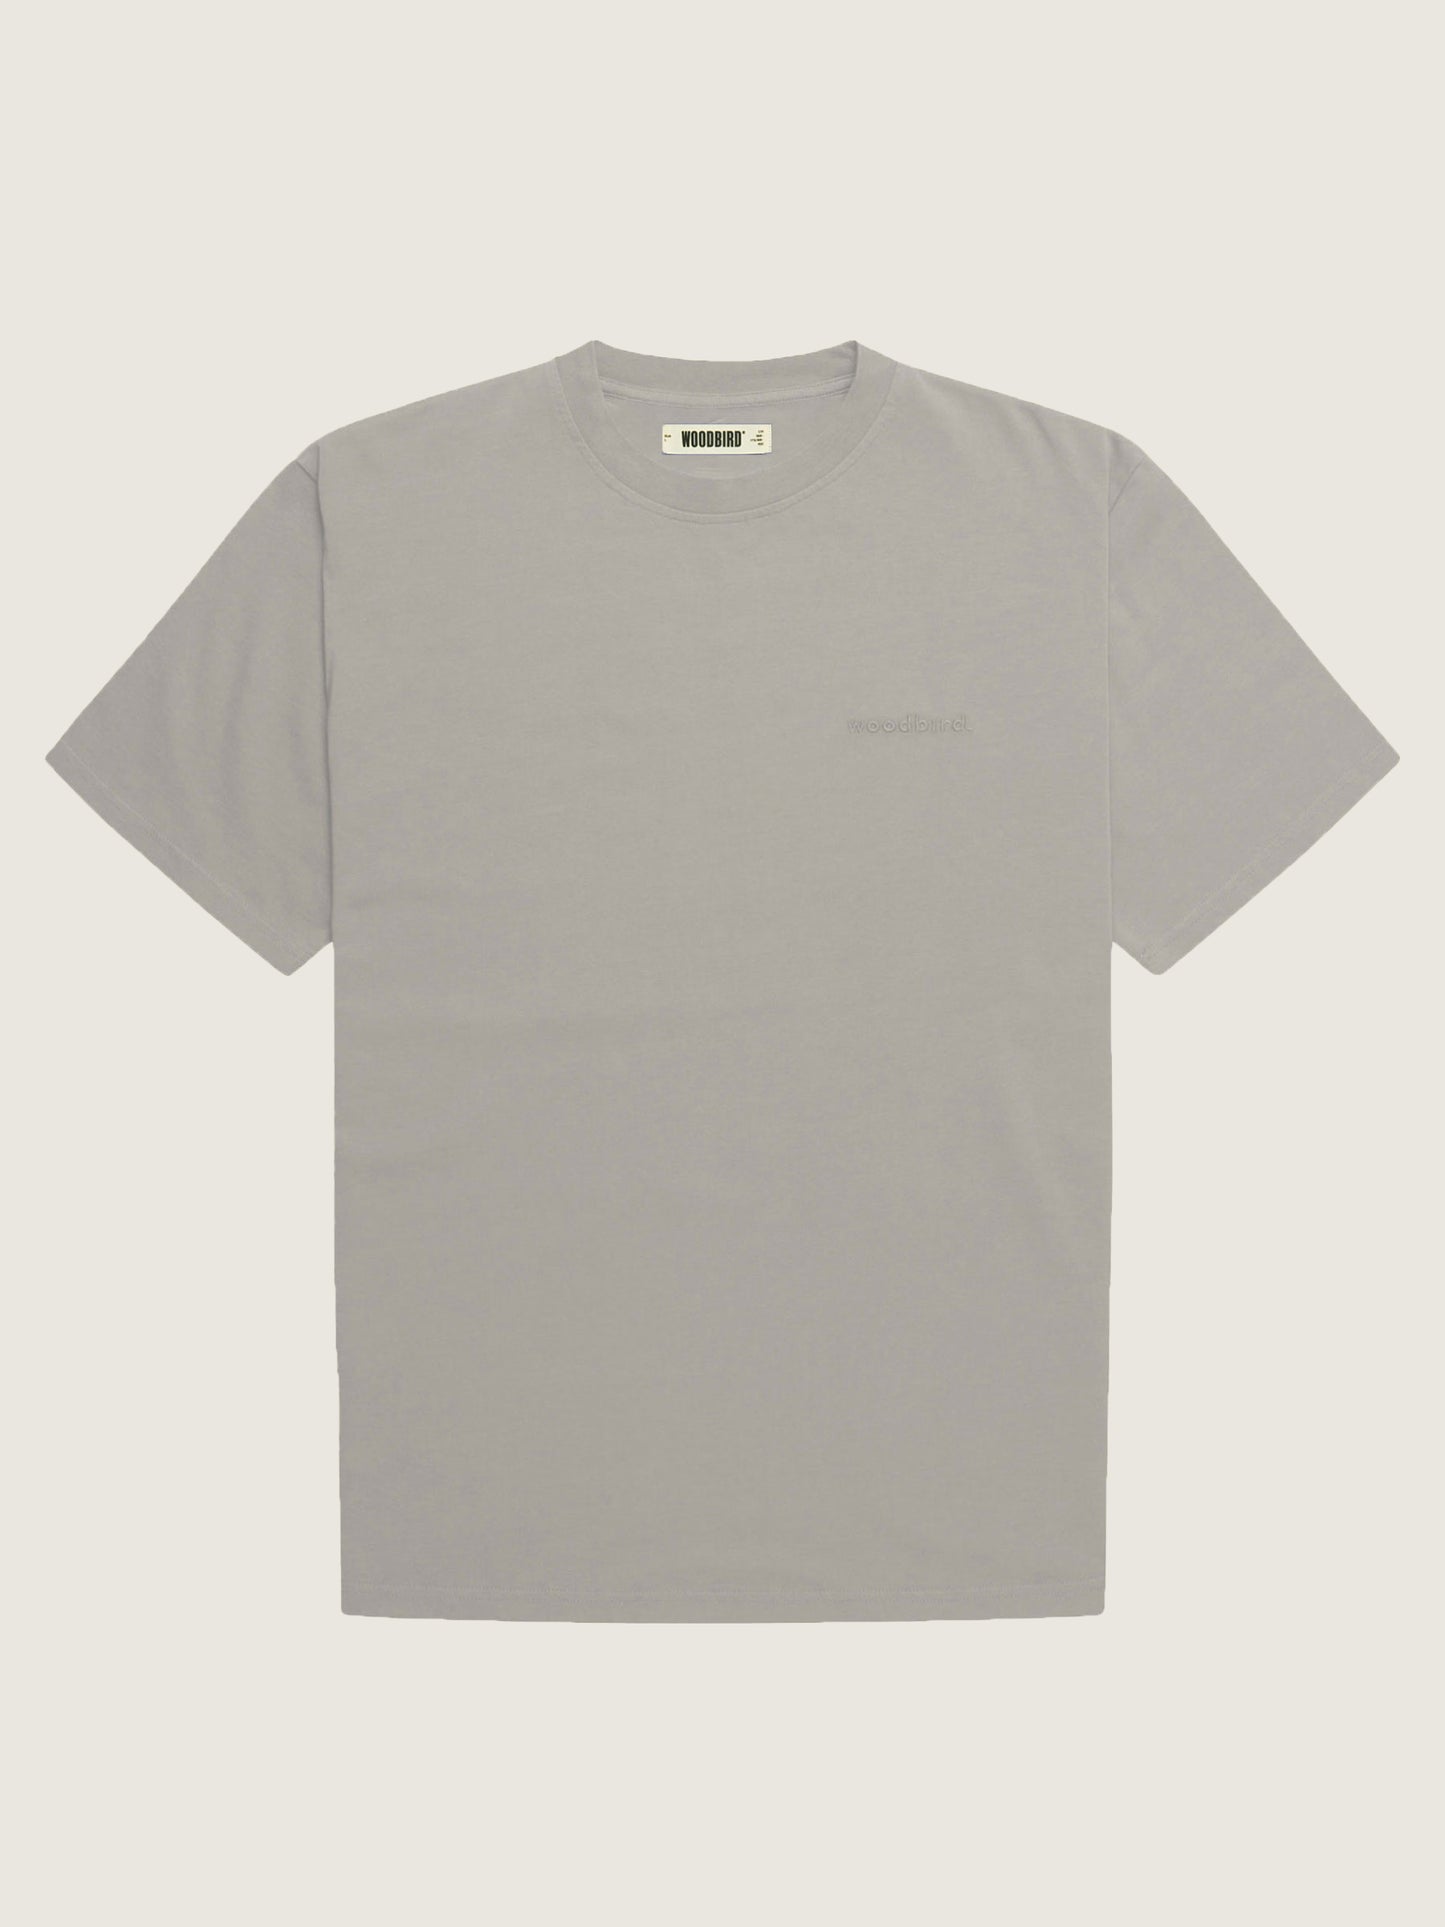 Woodbird WBBaine Base Tee T-Shirts Light Grey